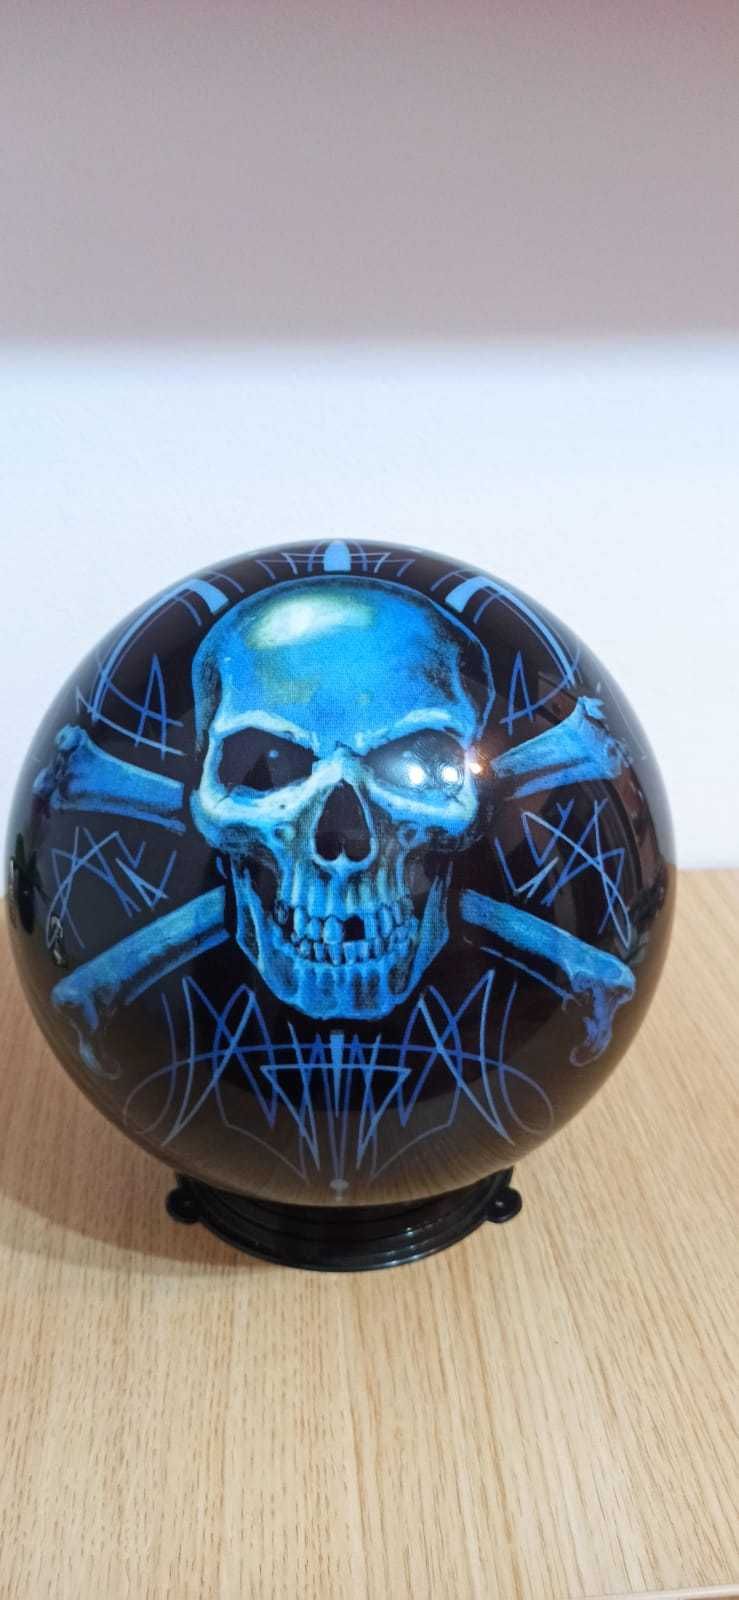 Bila bowling (Brunswick Blue Skull Viz-A-Ball Bowling Ball ).